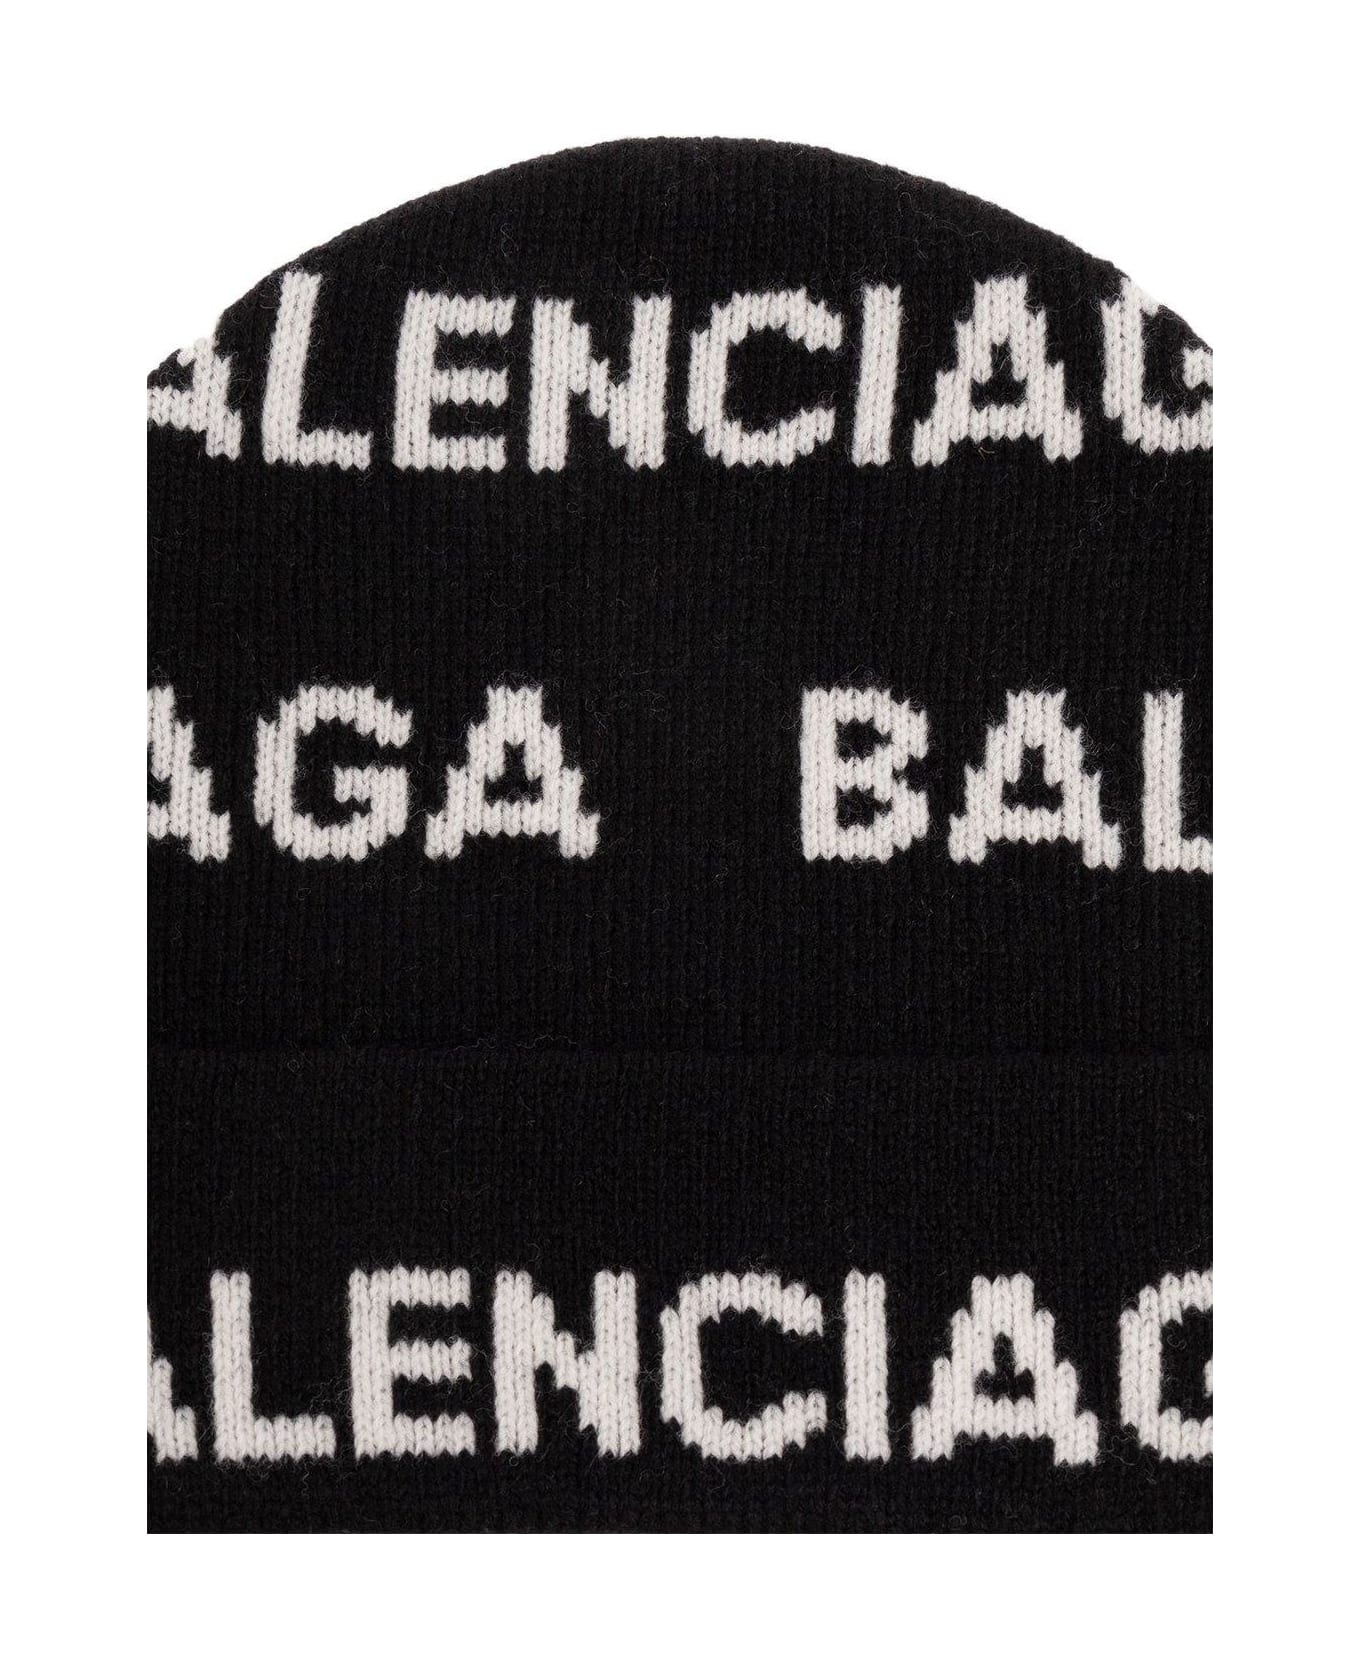 Balenciaga Logo Intarsia Beanie - BLACK 帽子